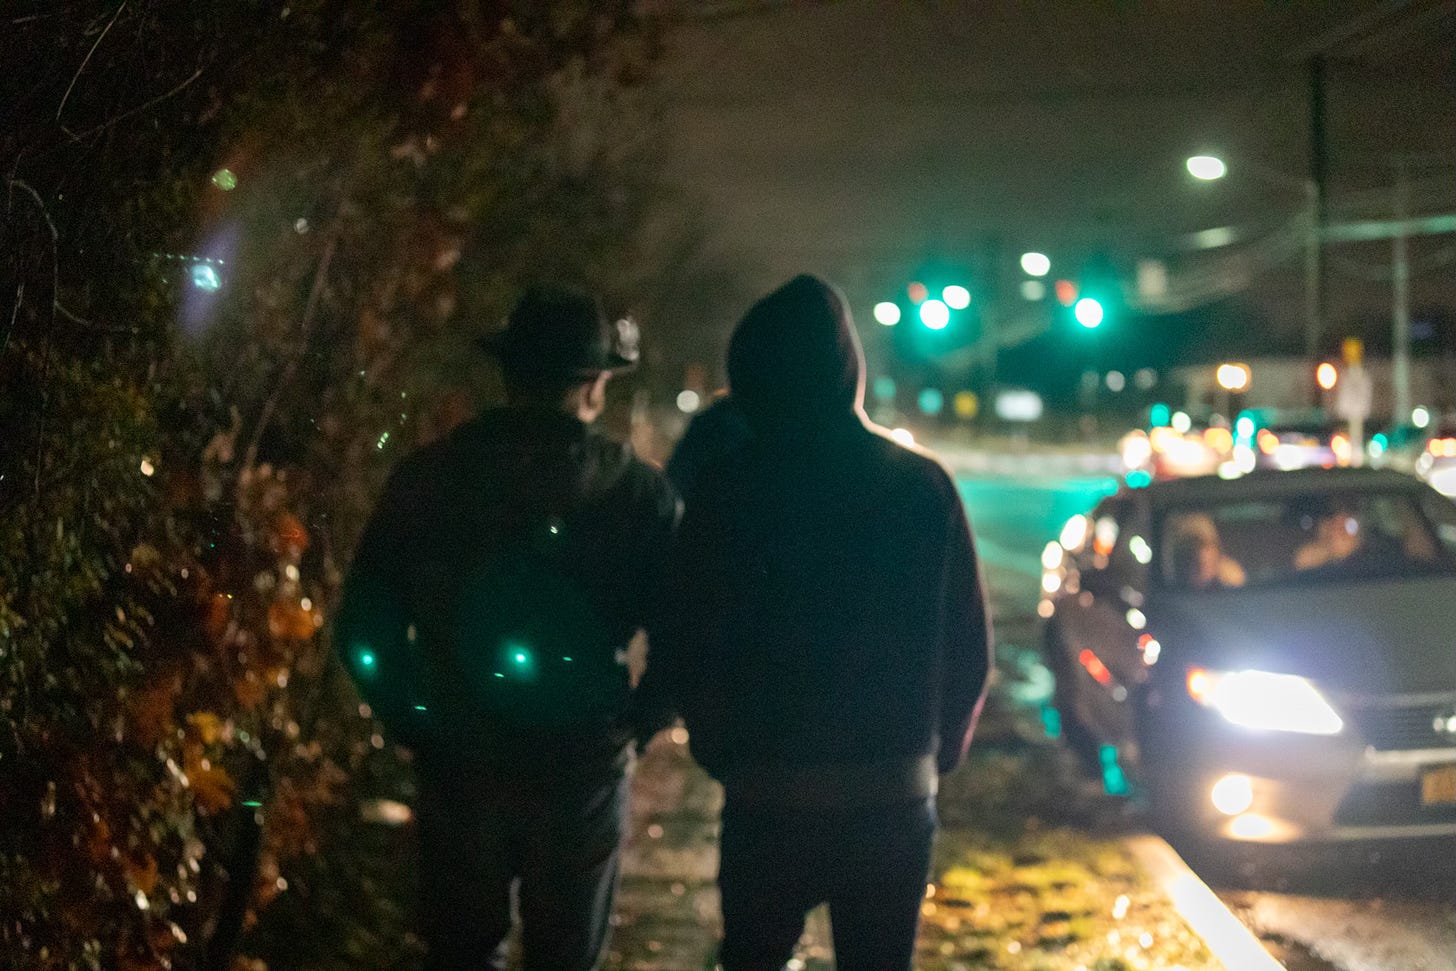 two men walk along a city street at night